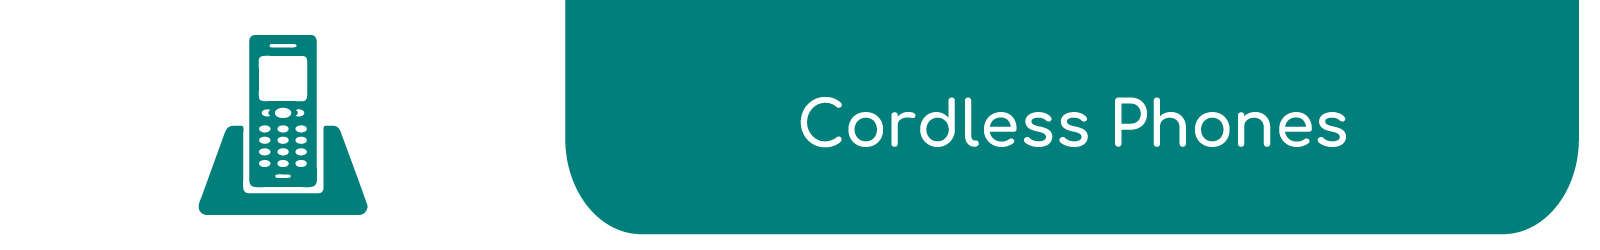 Cordless Phones - Electronic Communication Services